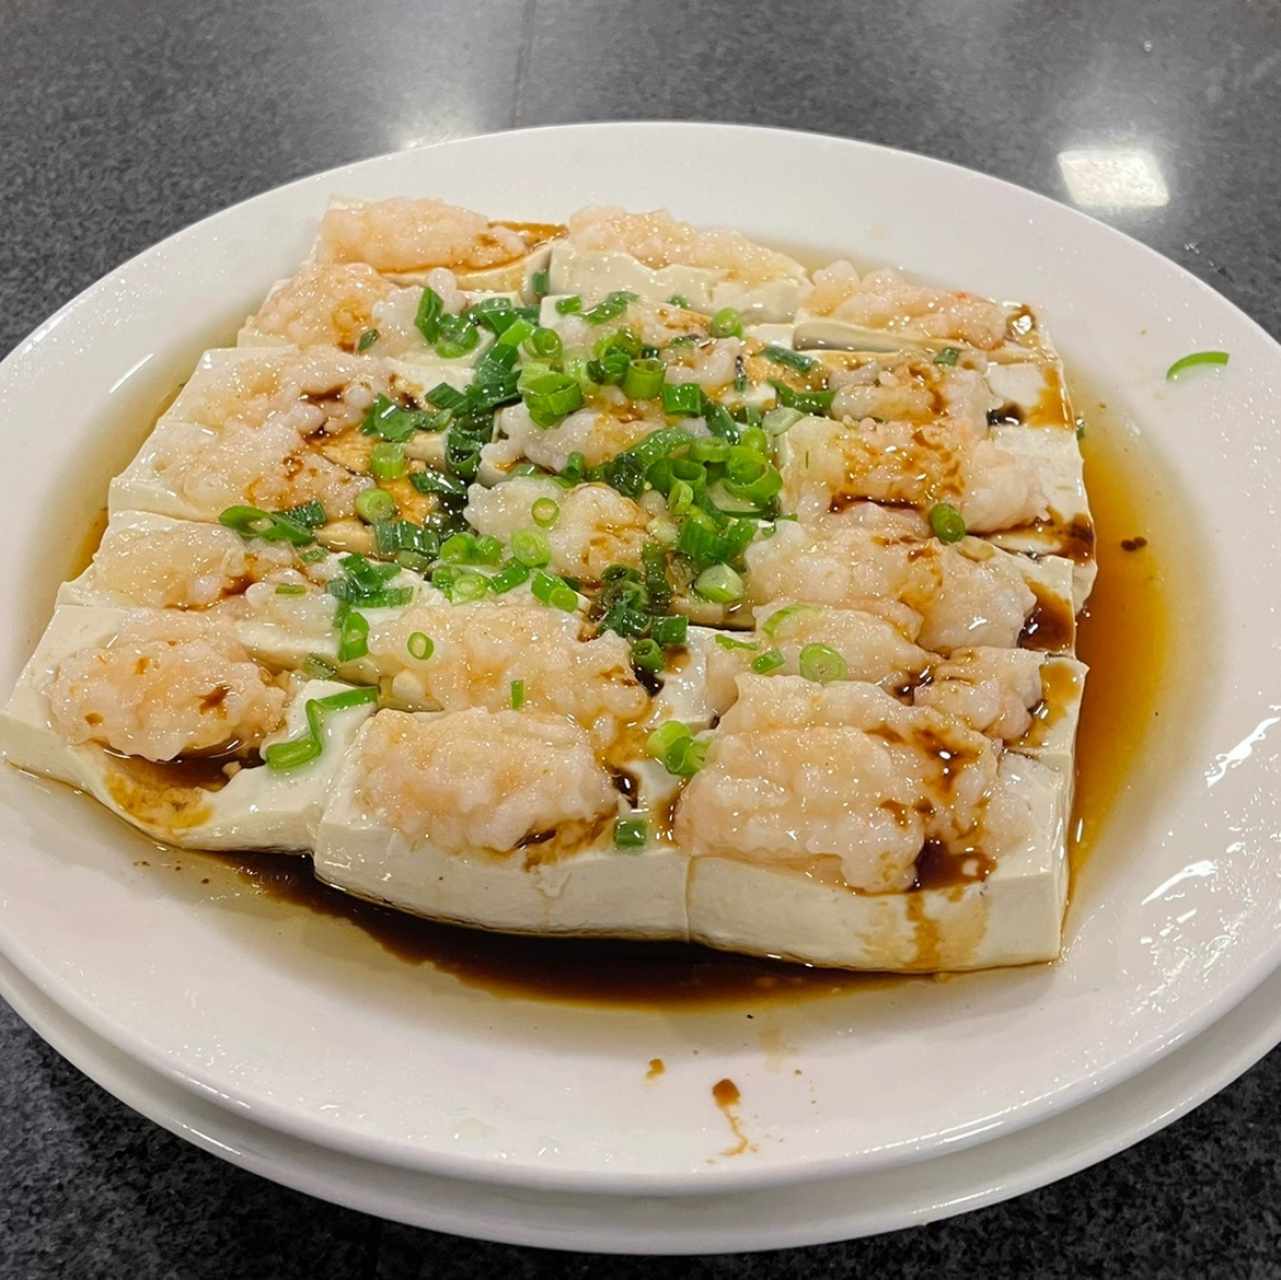 tofu relleno